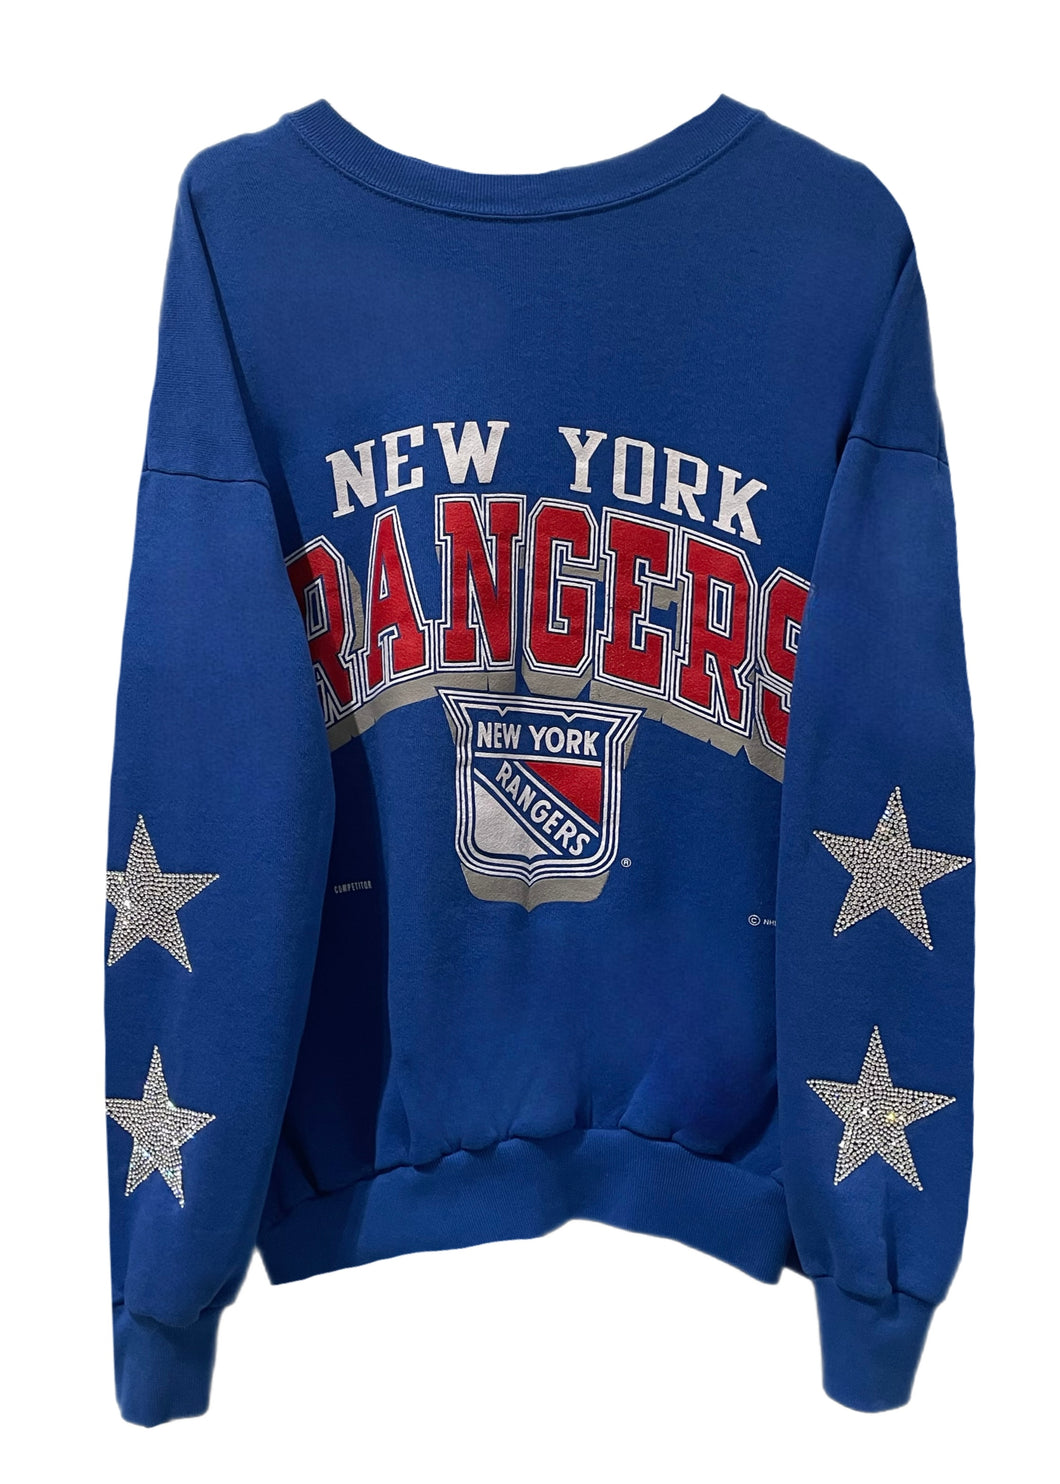 New York Rangers, NHL One of a KIND Vintage Sweatshirt with Crystal Star Design